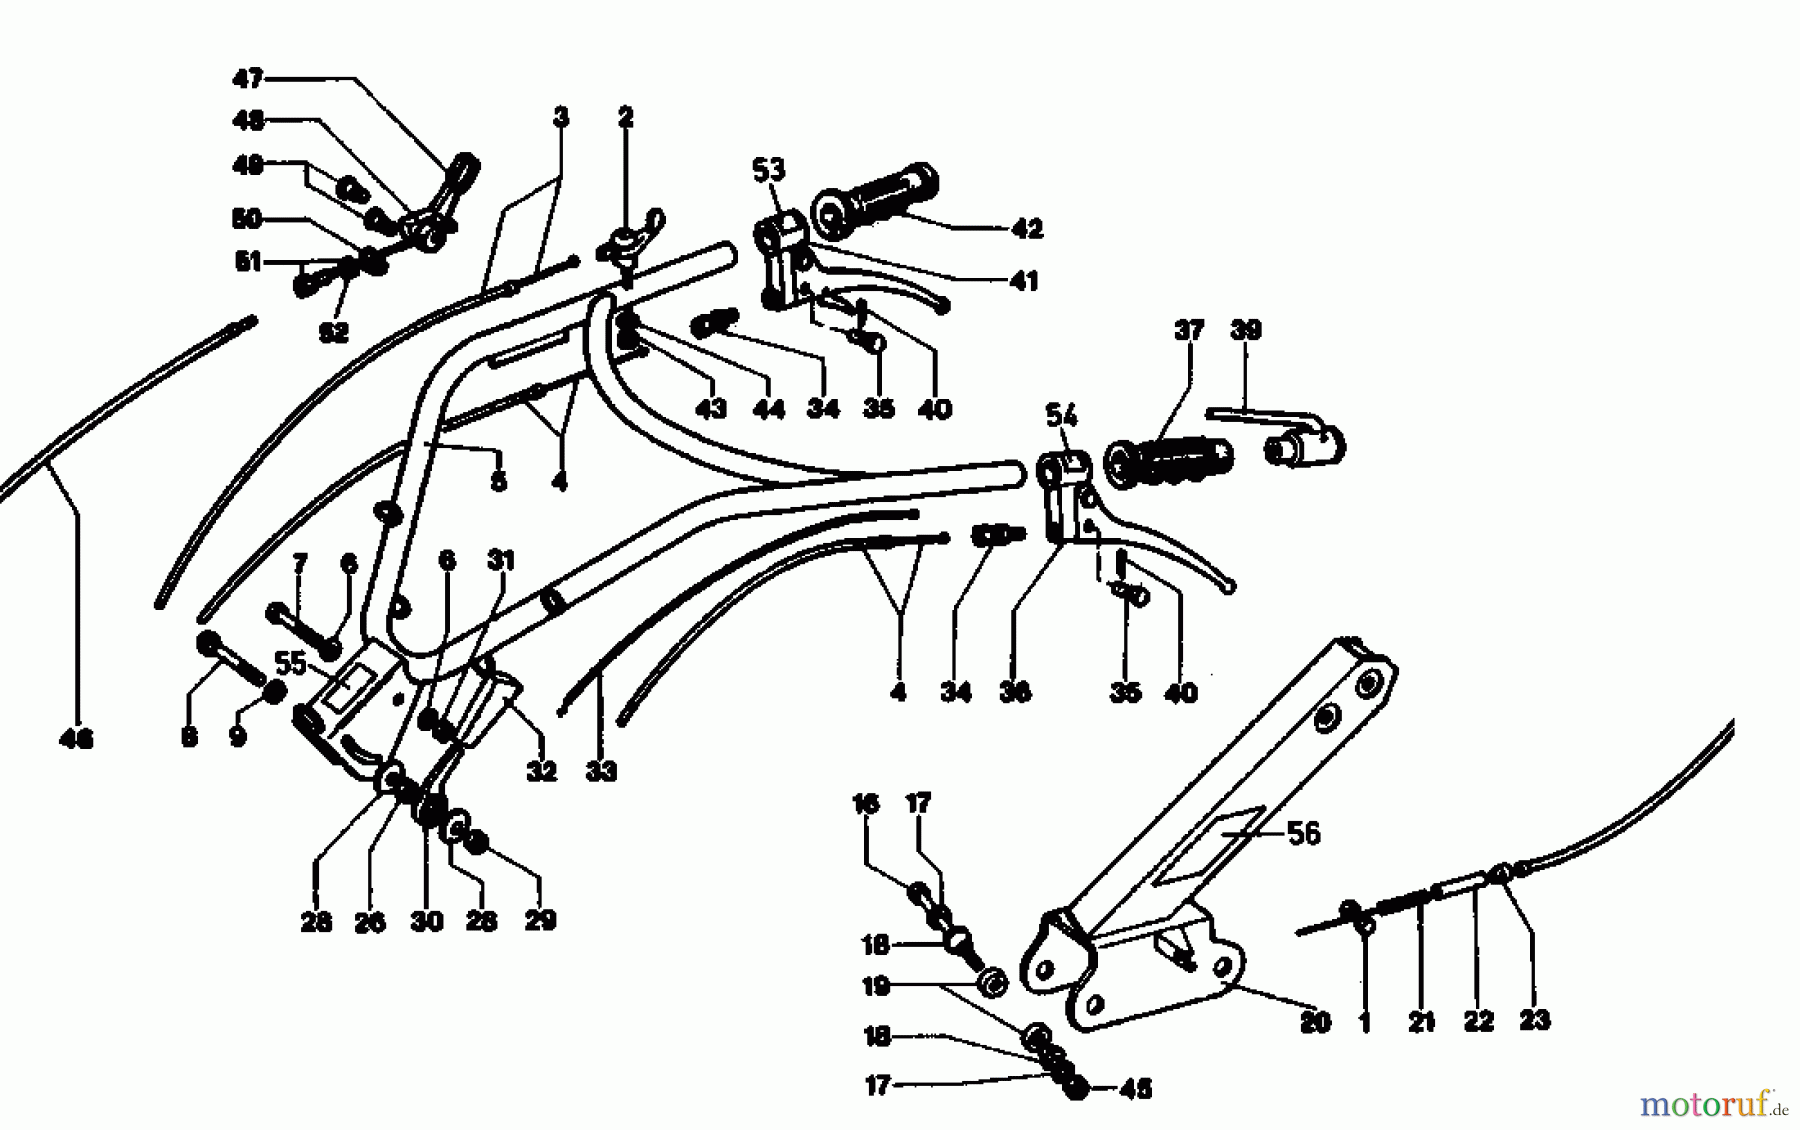  Gutbrod Cutter bar mower BM 110 07517.01  (1992) Handle